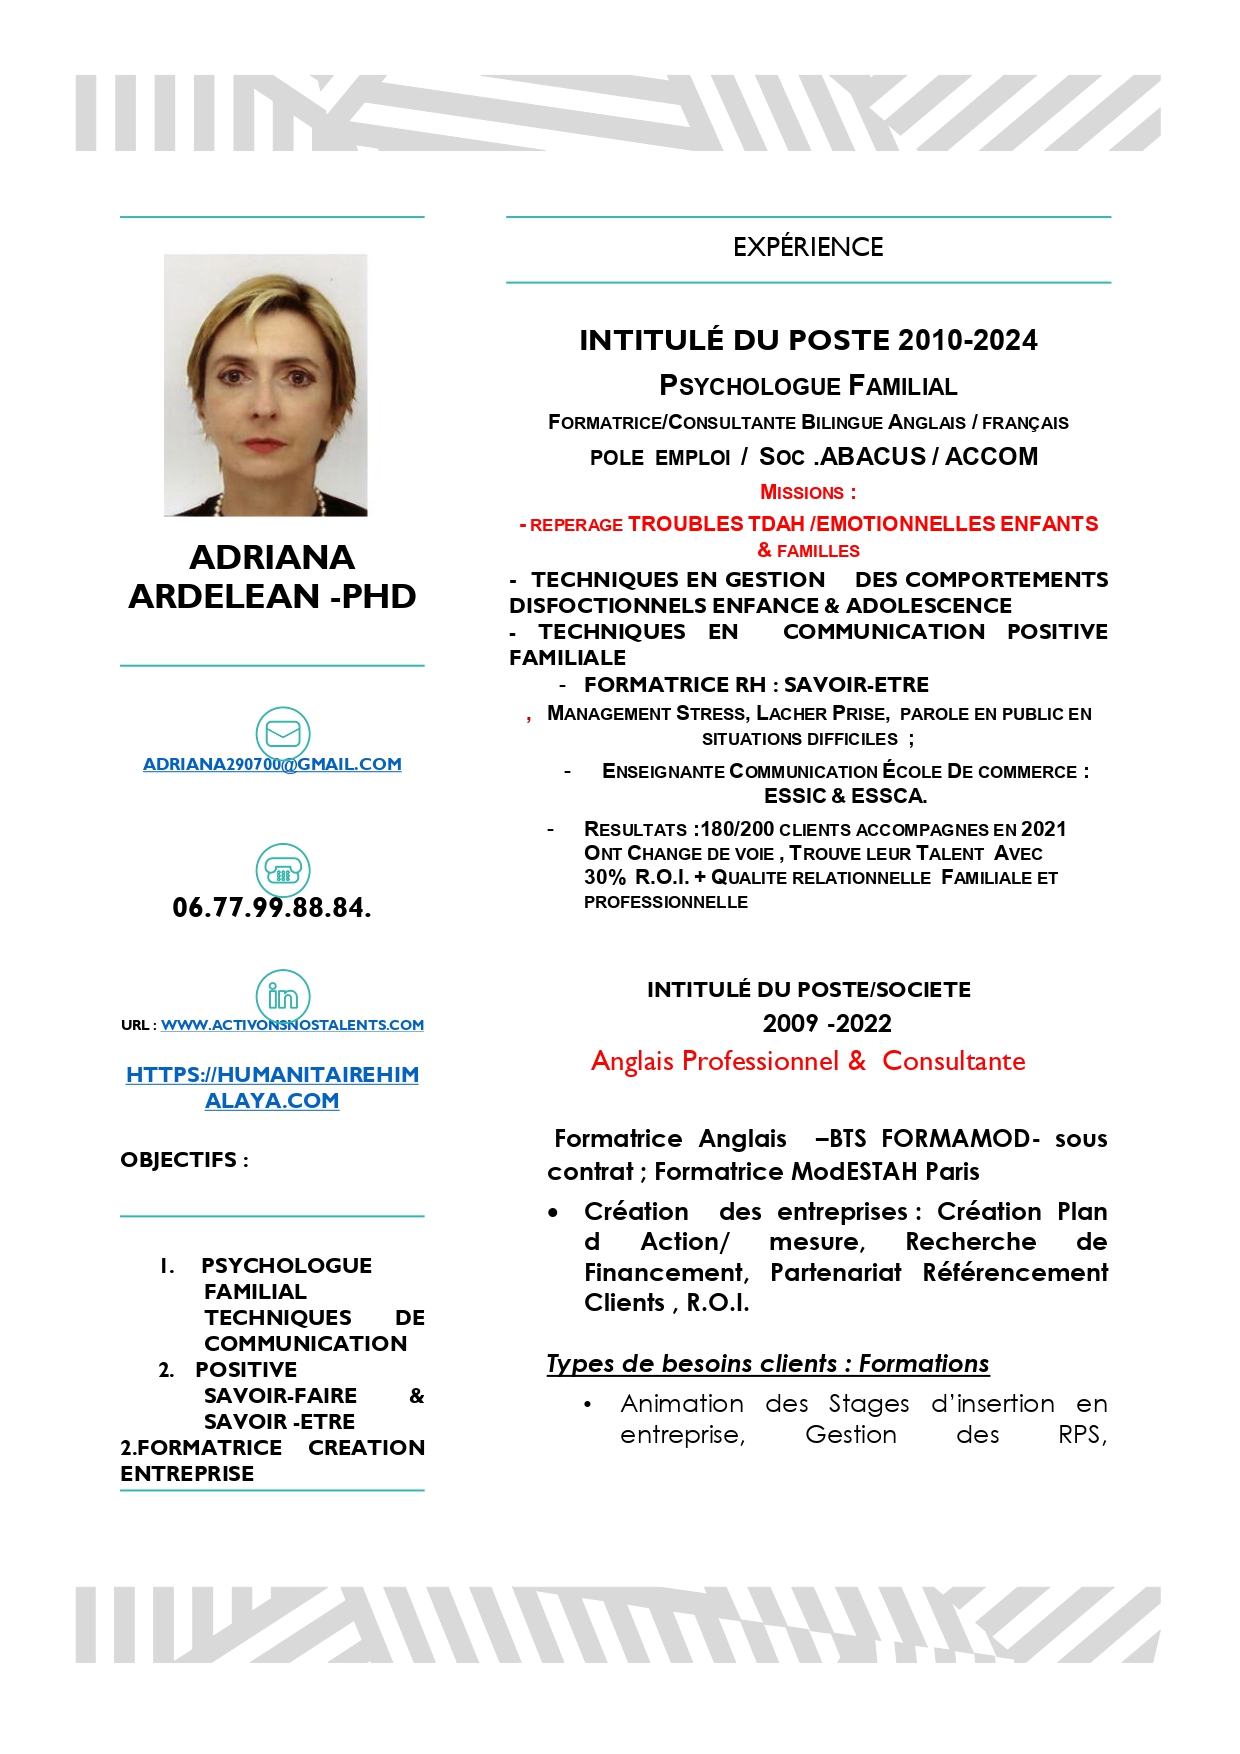 Adriana ARDELEAN - PhD.